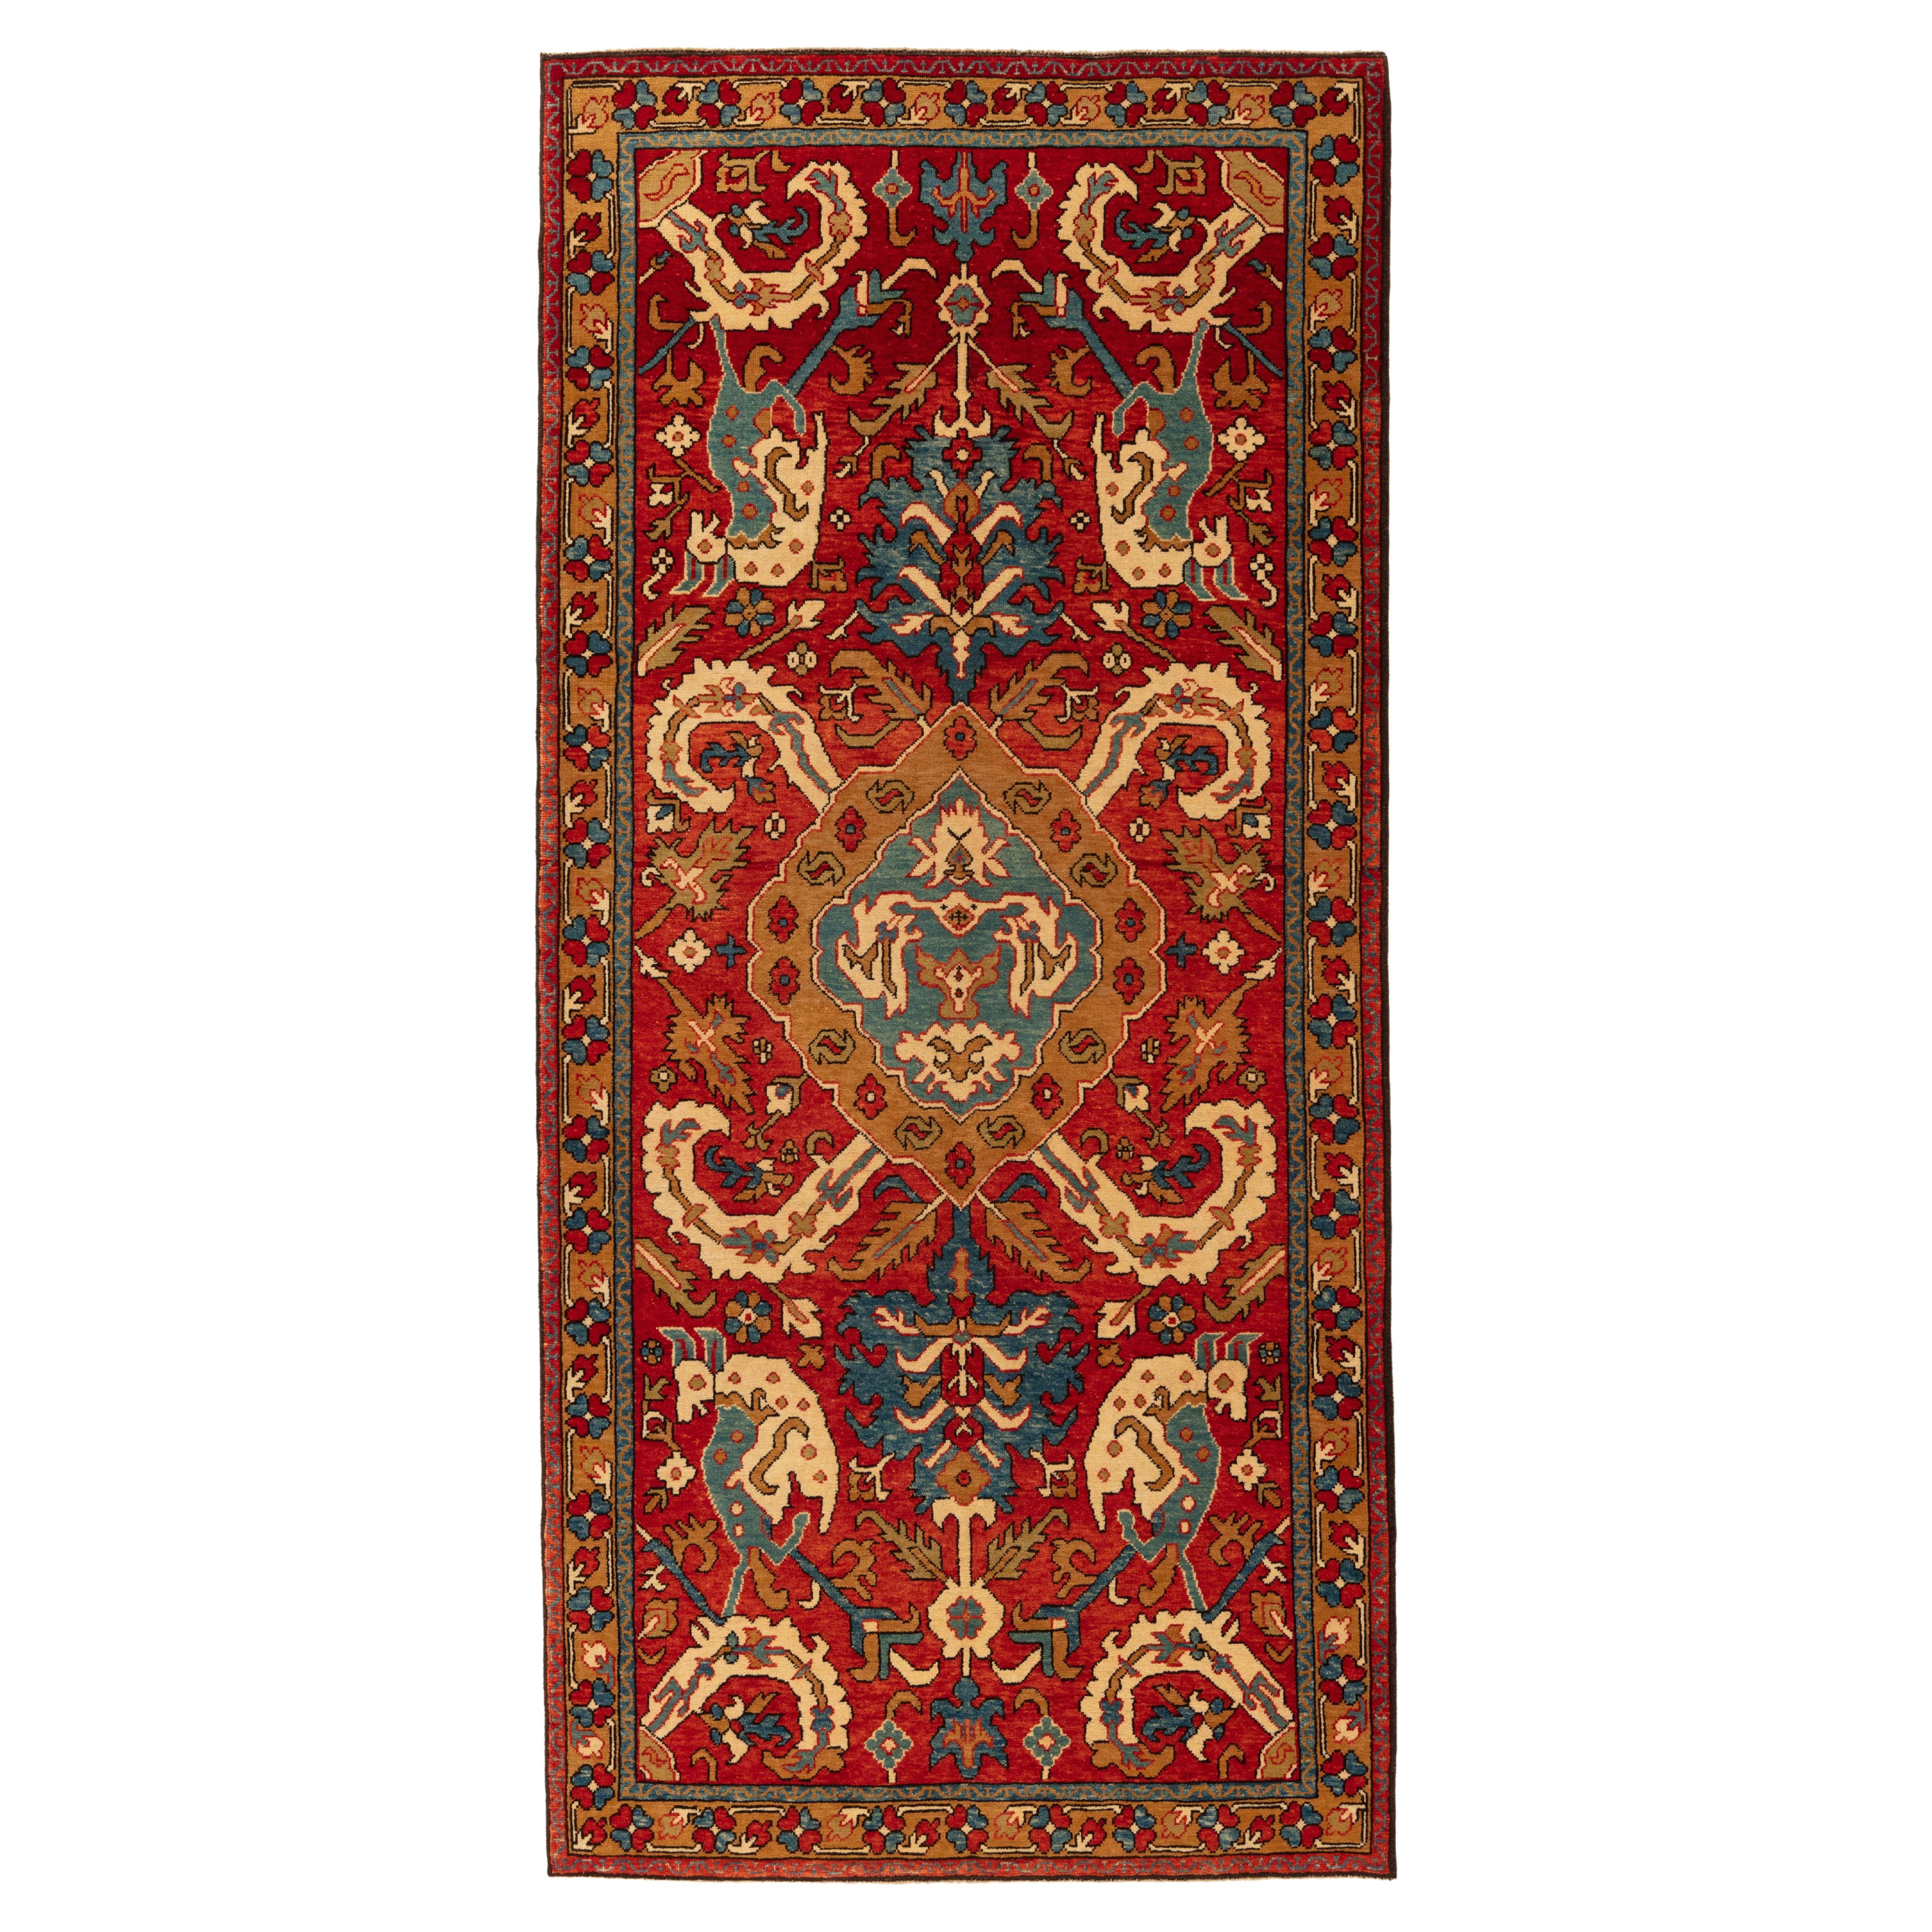 Ararat Rugs Dragon Rug, Antique Caucasian Revival Carpet, Natural Dyed